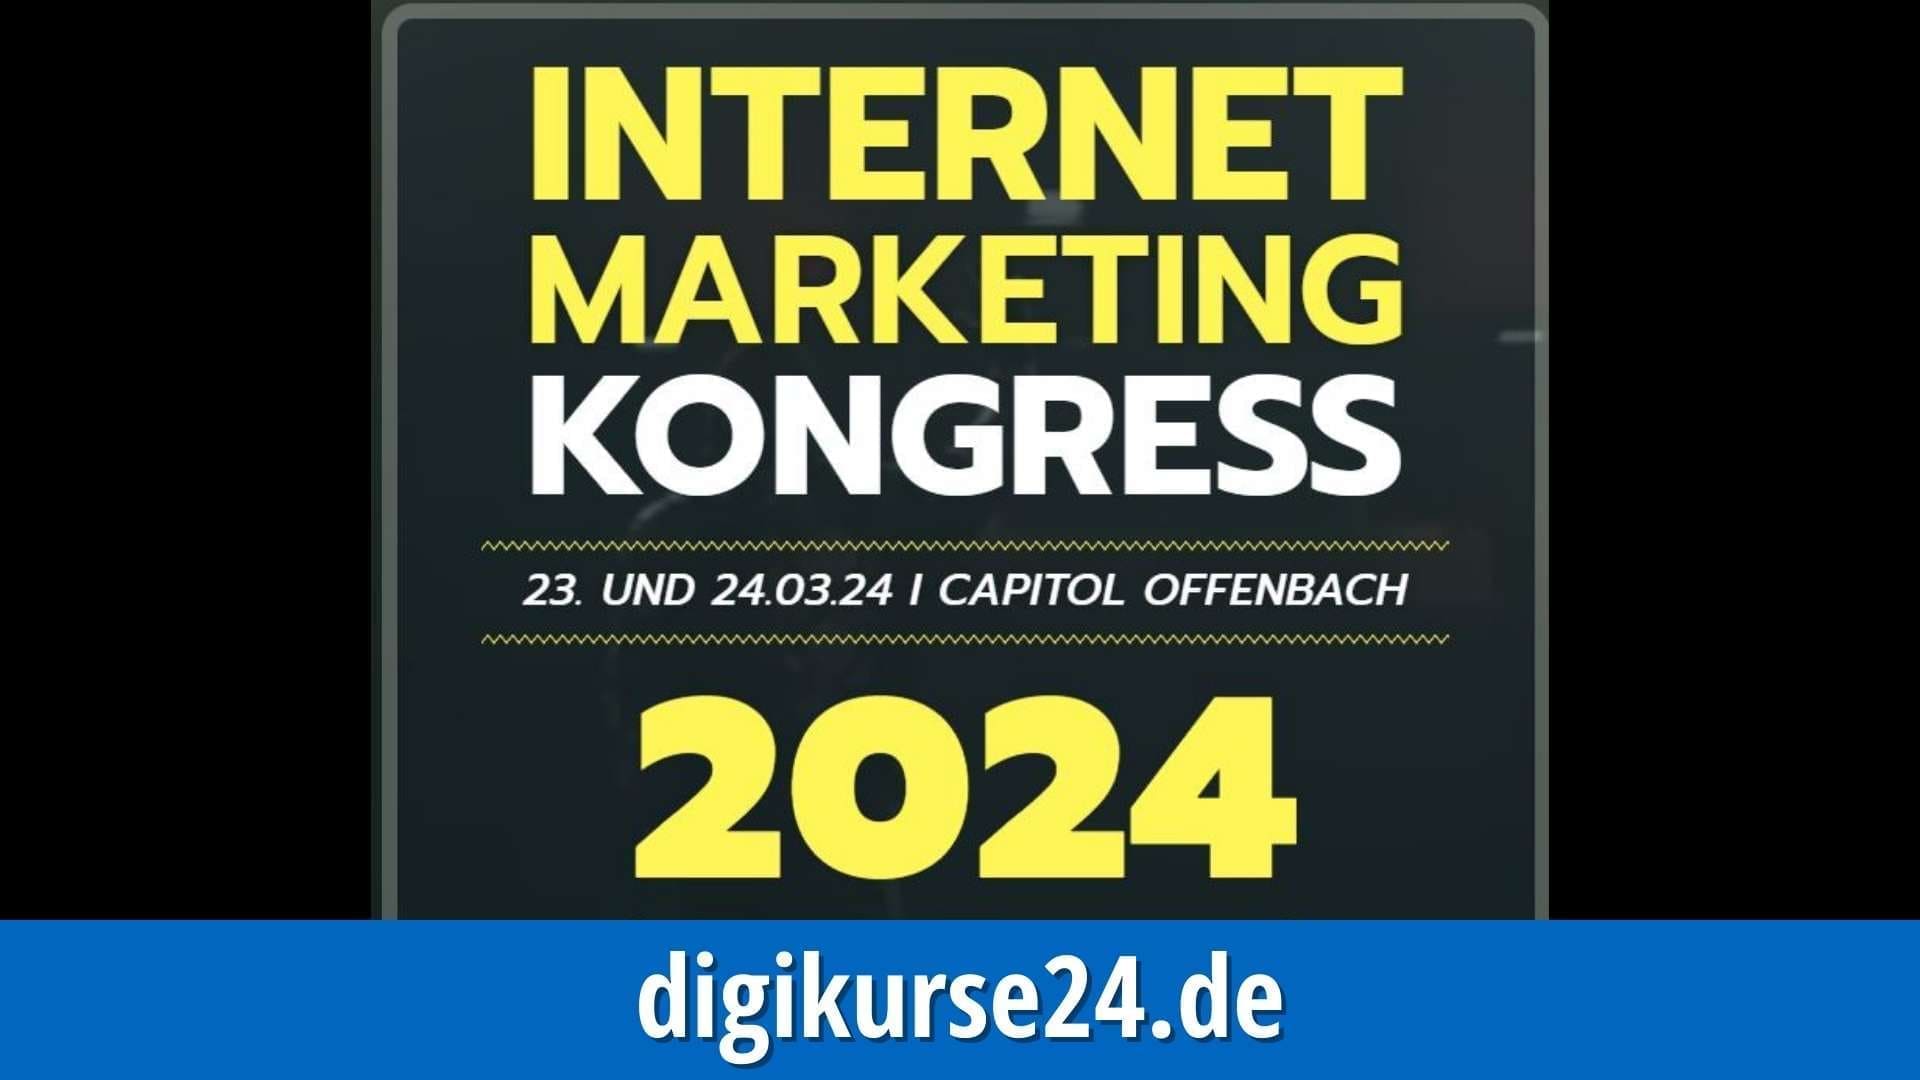 Internet Marketing Kongress 2024 - IMK